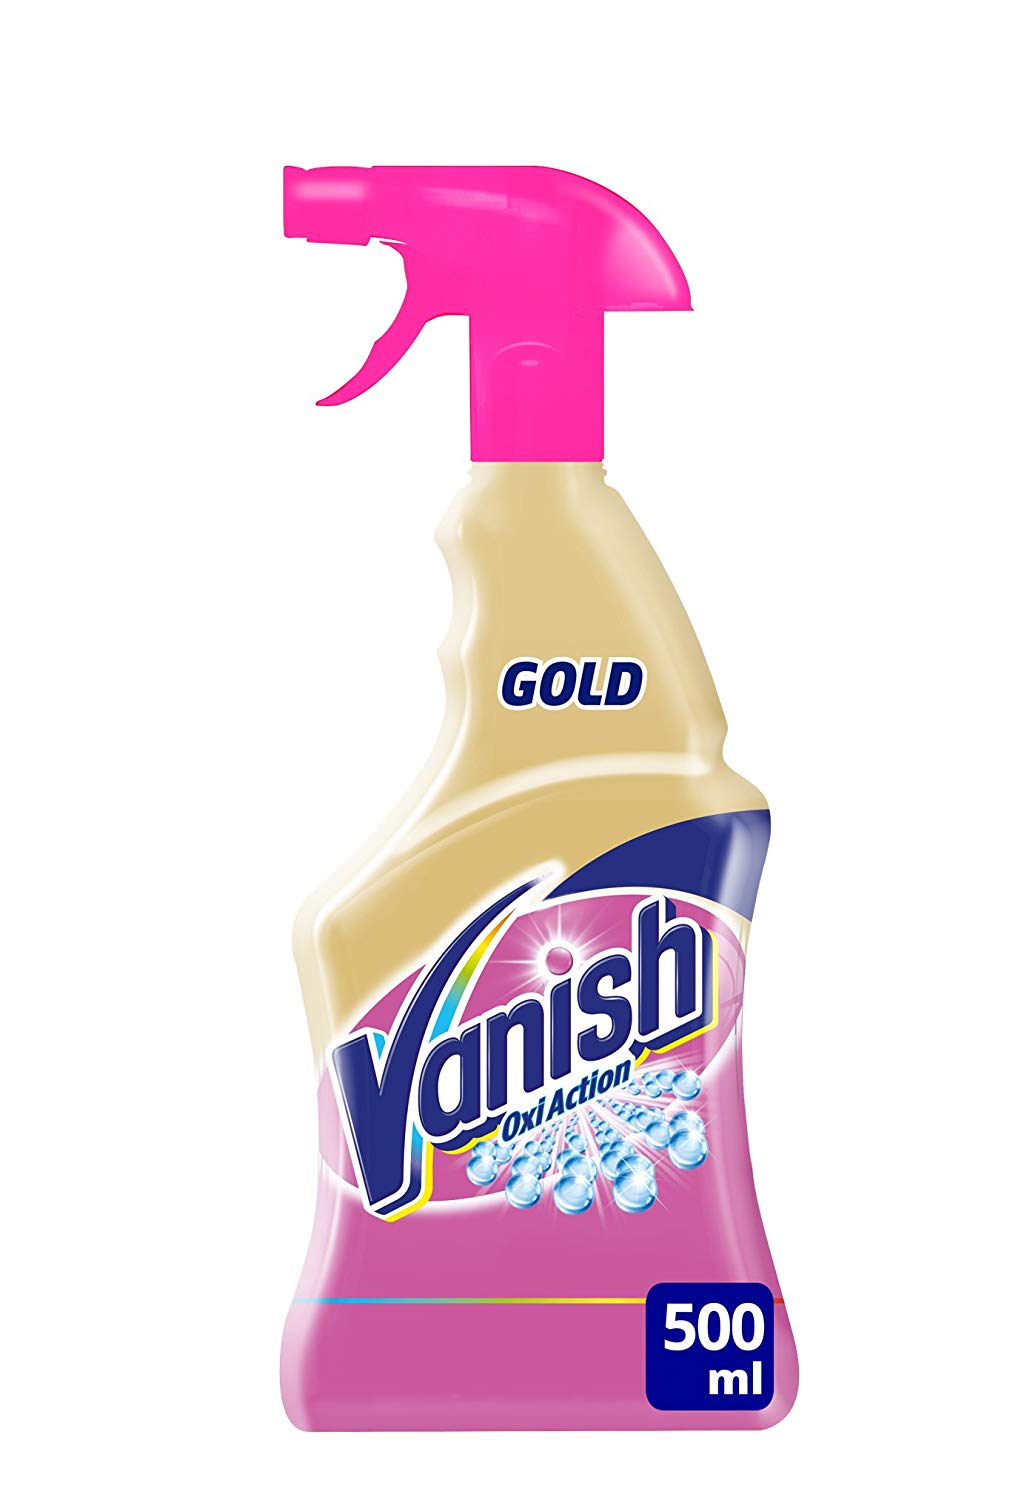 2 Vanish Gold Spray solo 4,1€